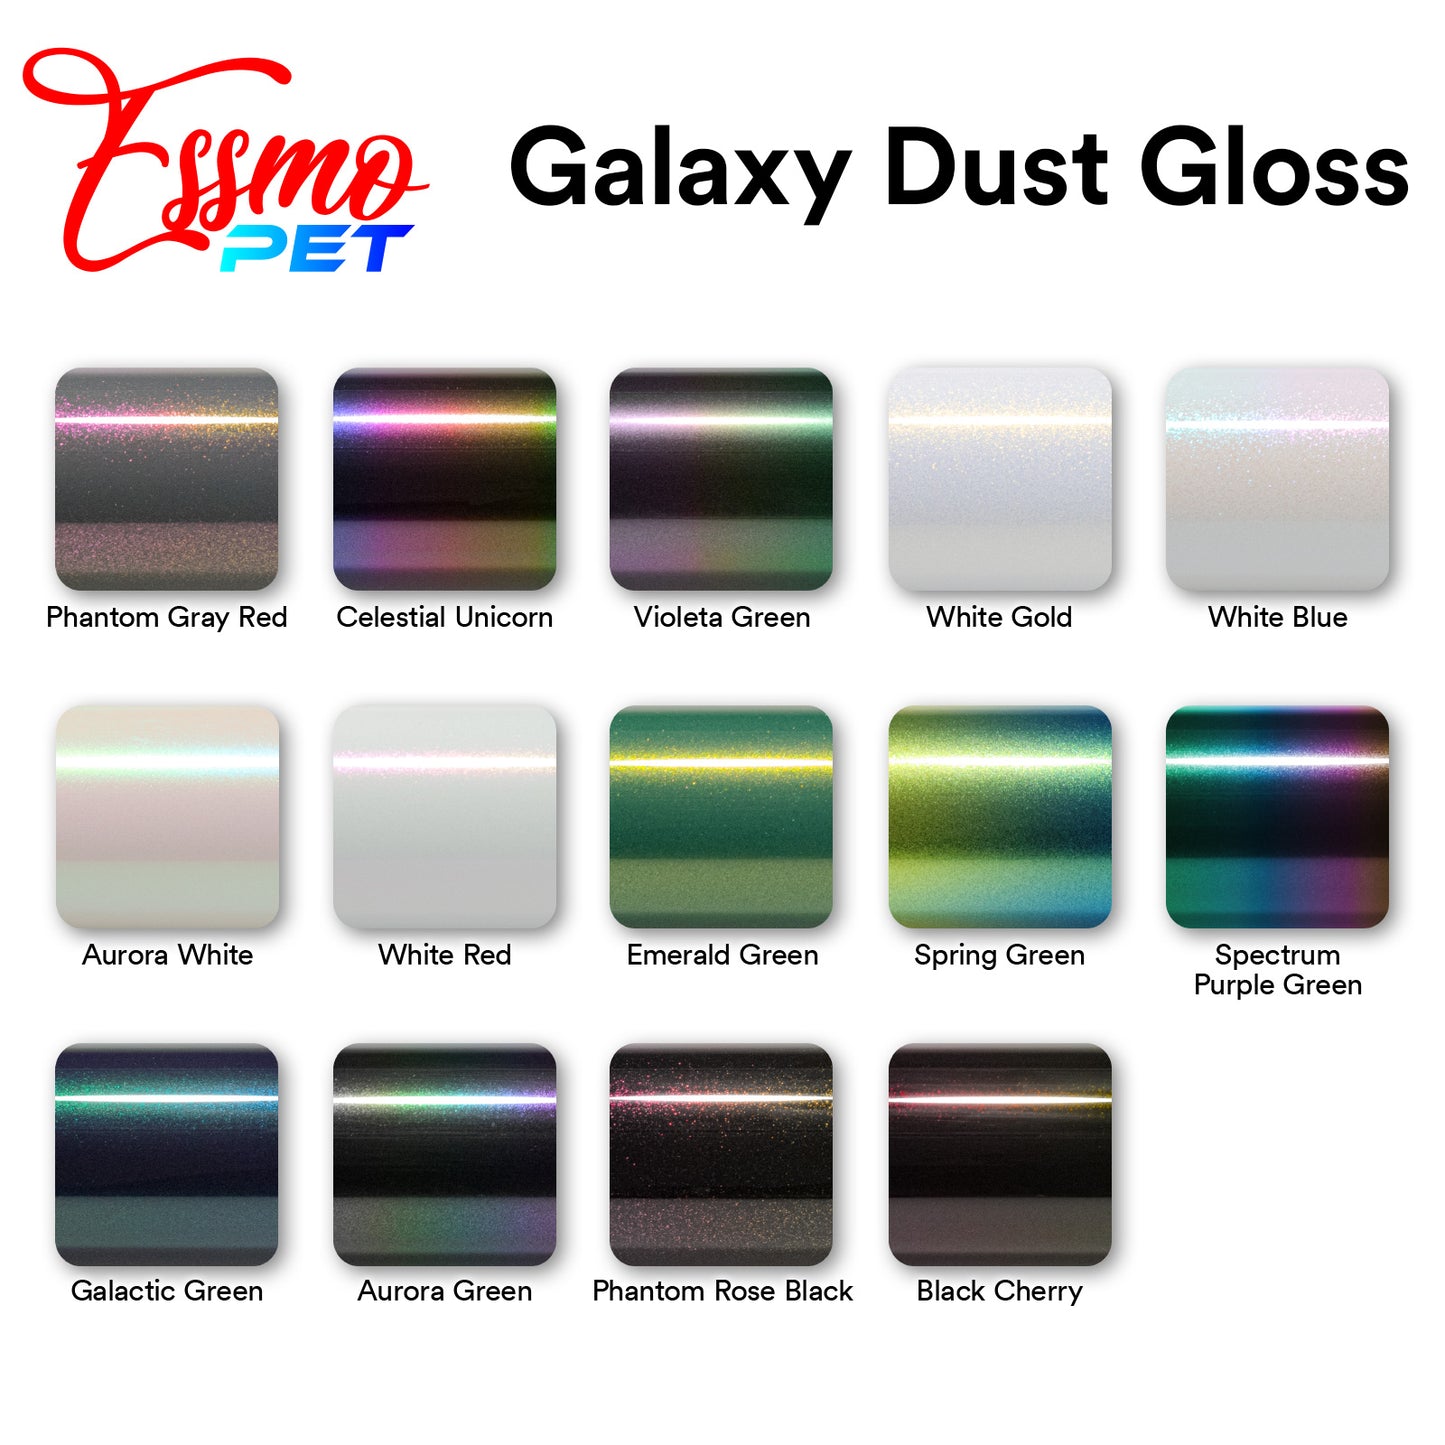 PET Galaxy Dust Gloss Aurora White Vinyl Wrap